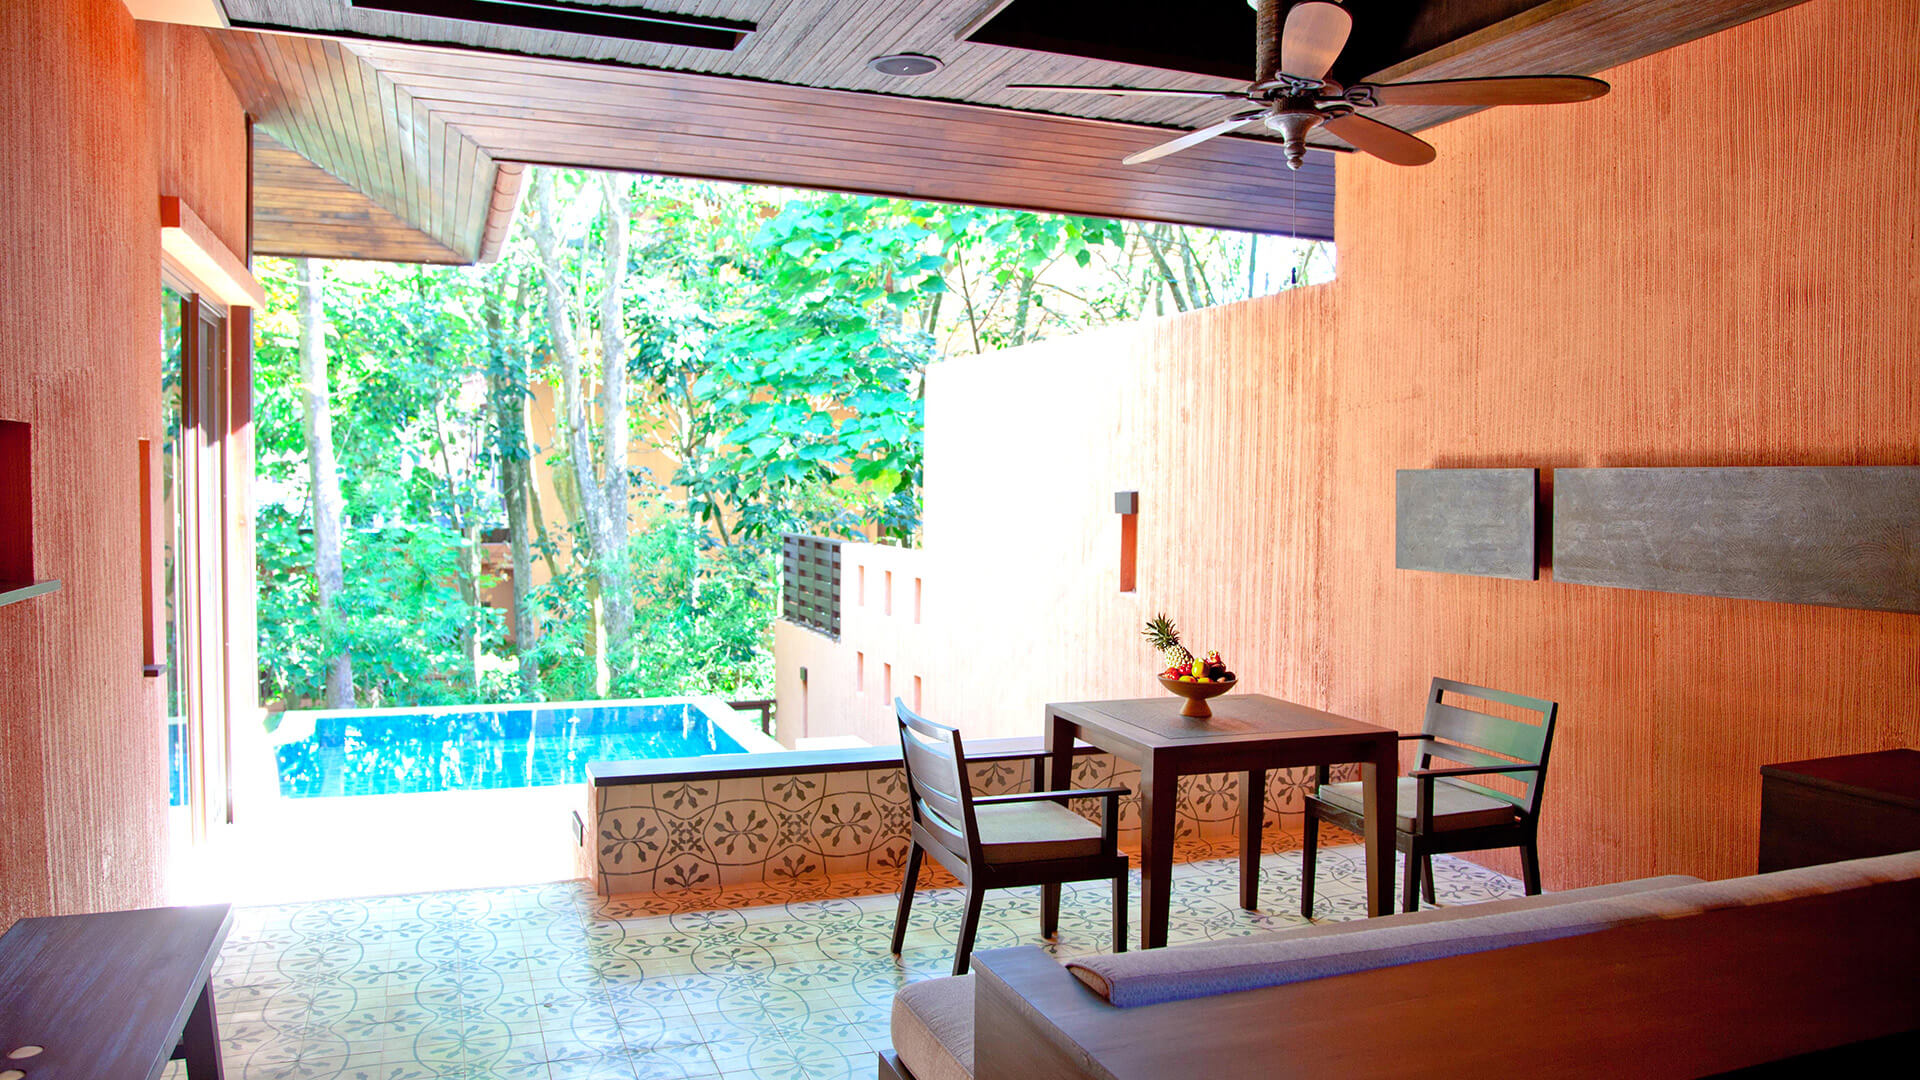 family suite hotel pool villas in phuket 1 bedroom living area garden view